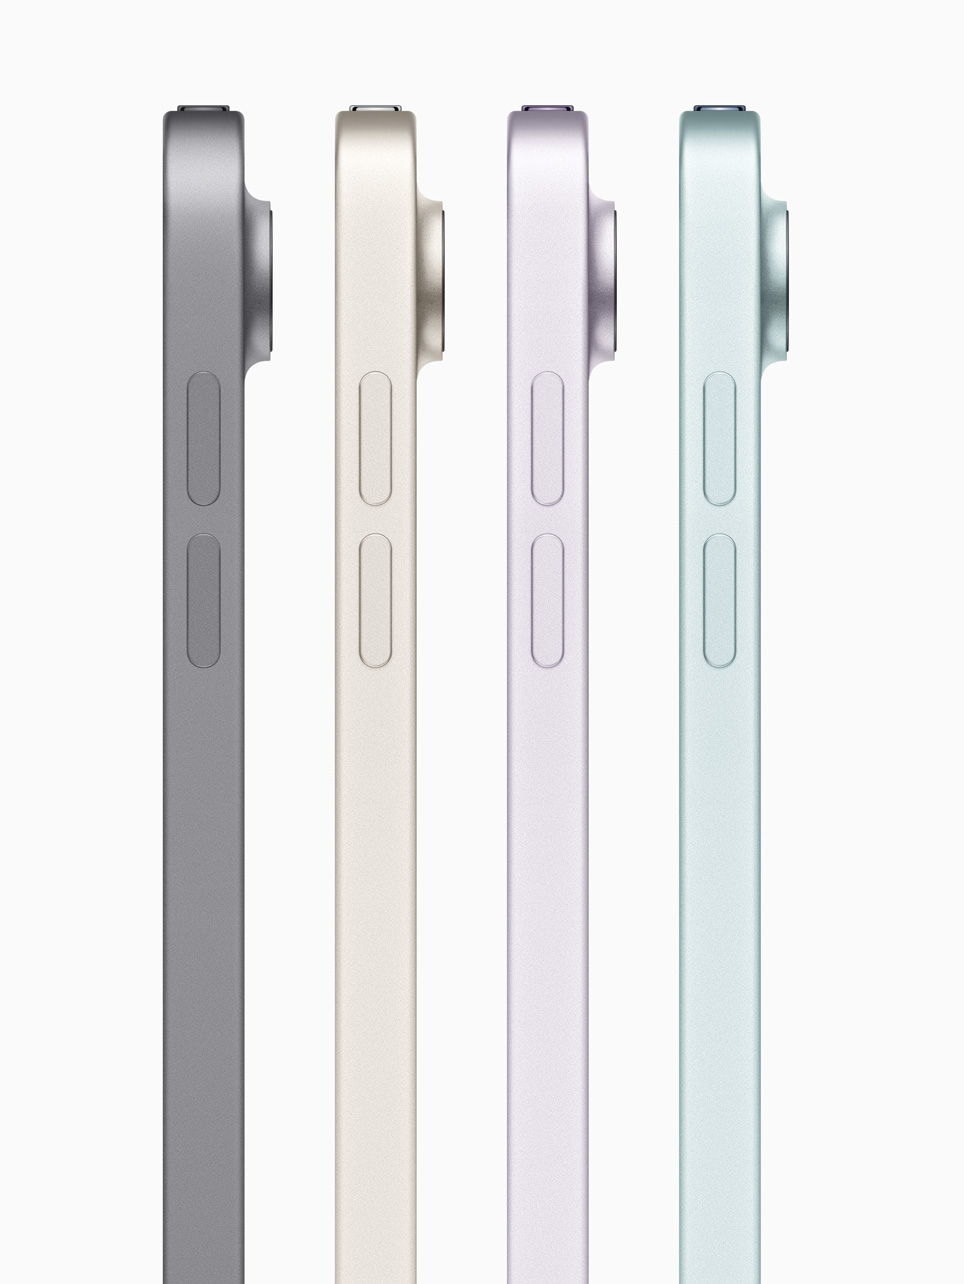 Apple-iPad-Air-color-lineup-240507.jpg